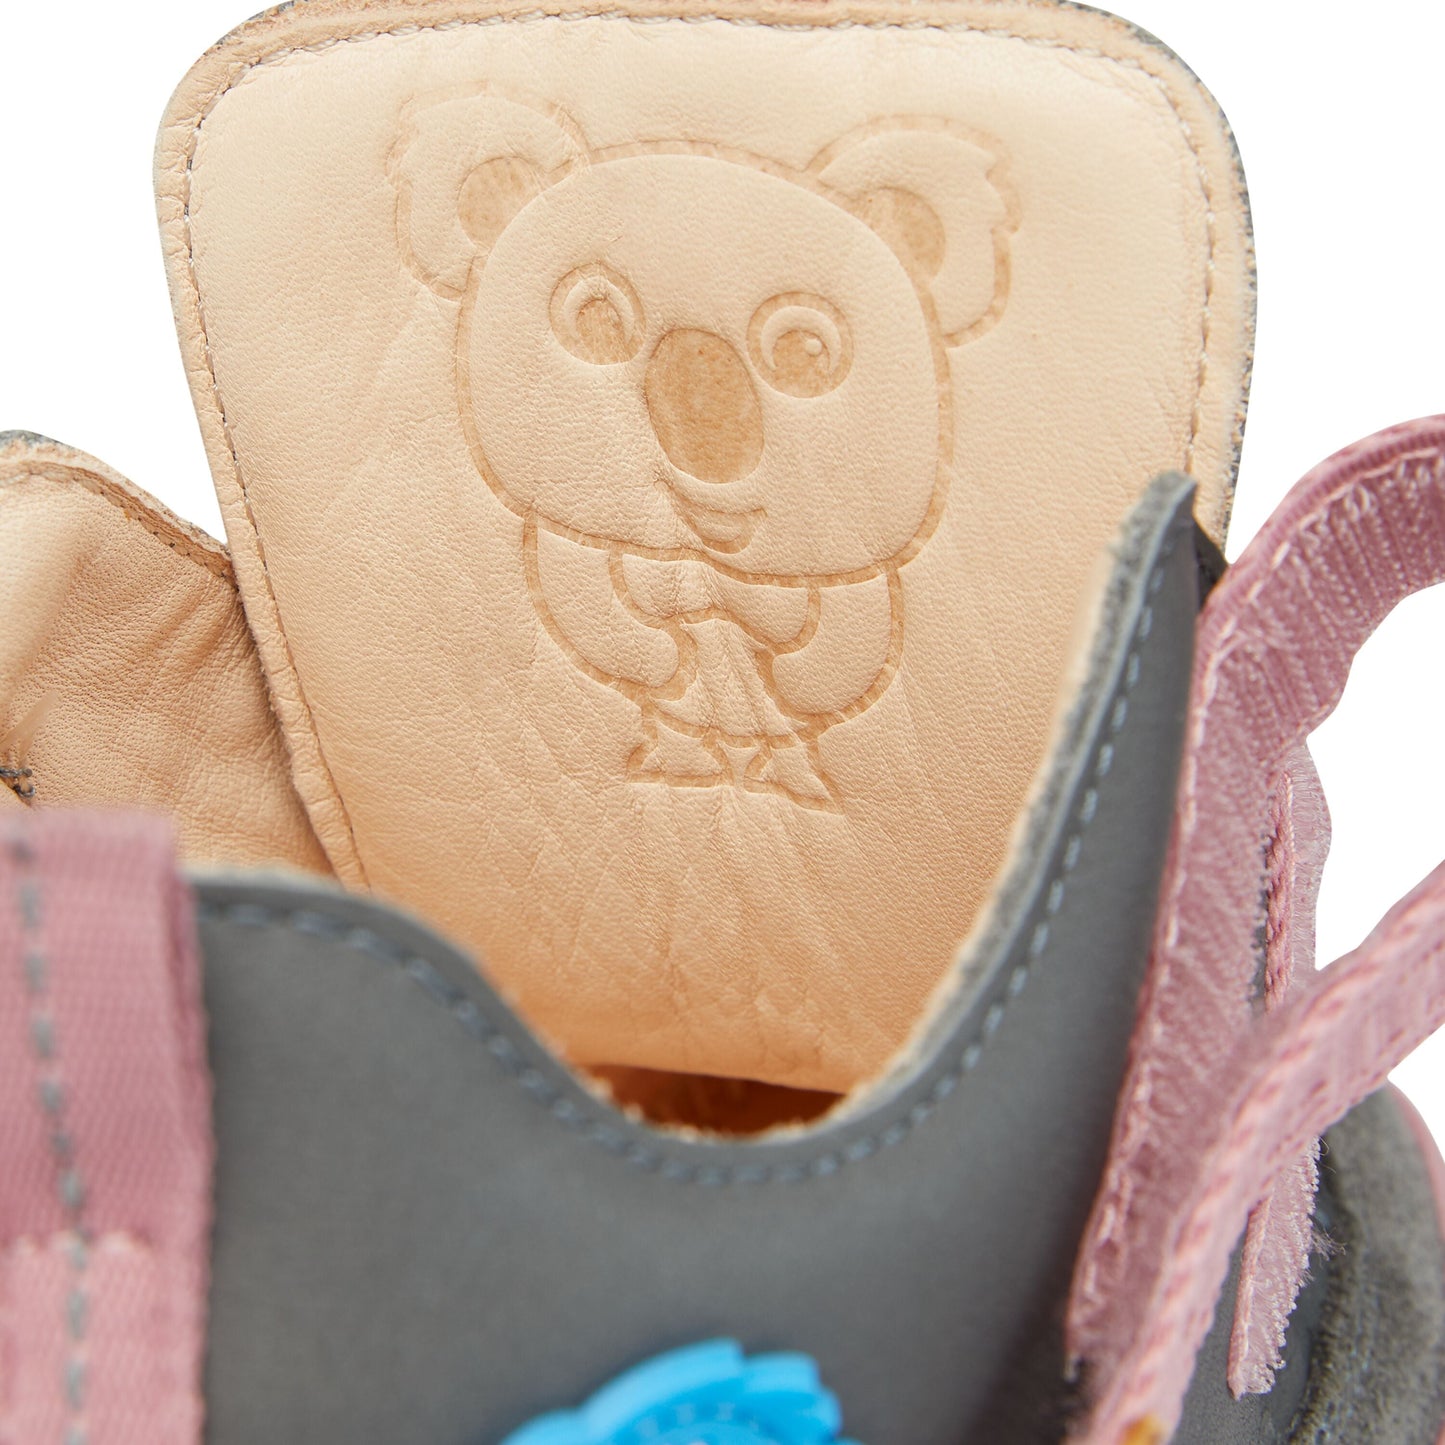 Affenzahn Leather Buddy barfods overgangssko til børn i farven koala / pink, detalje